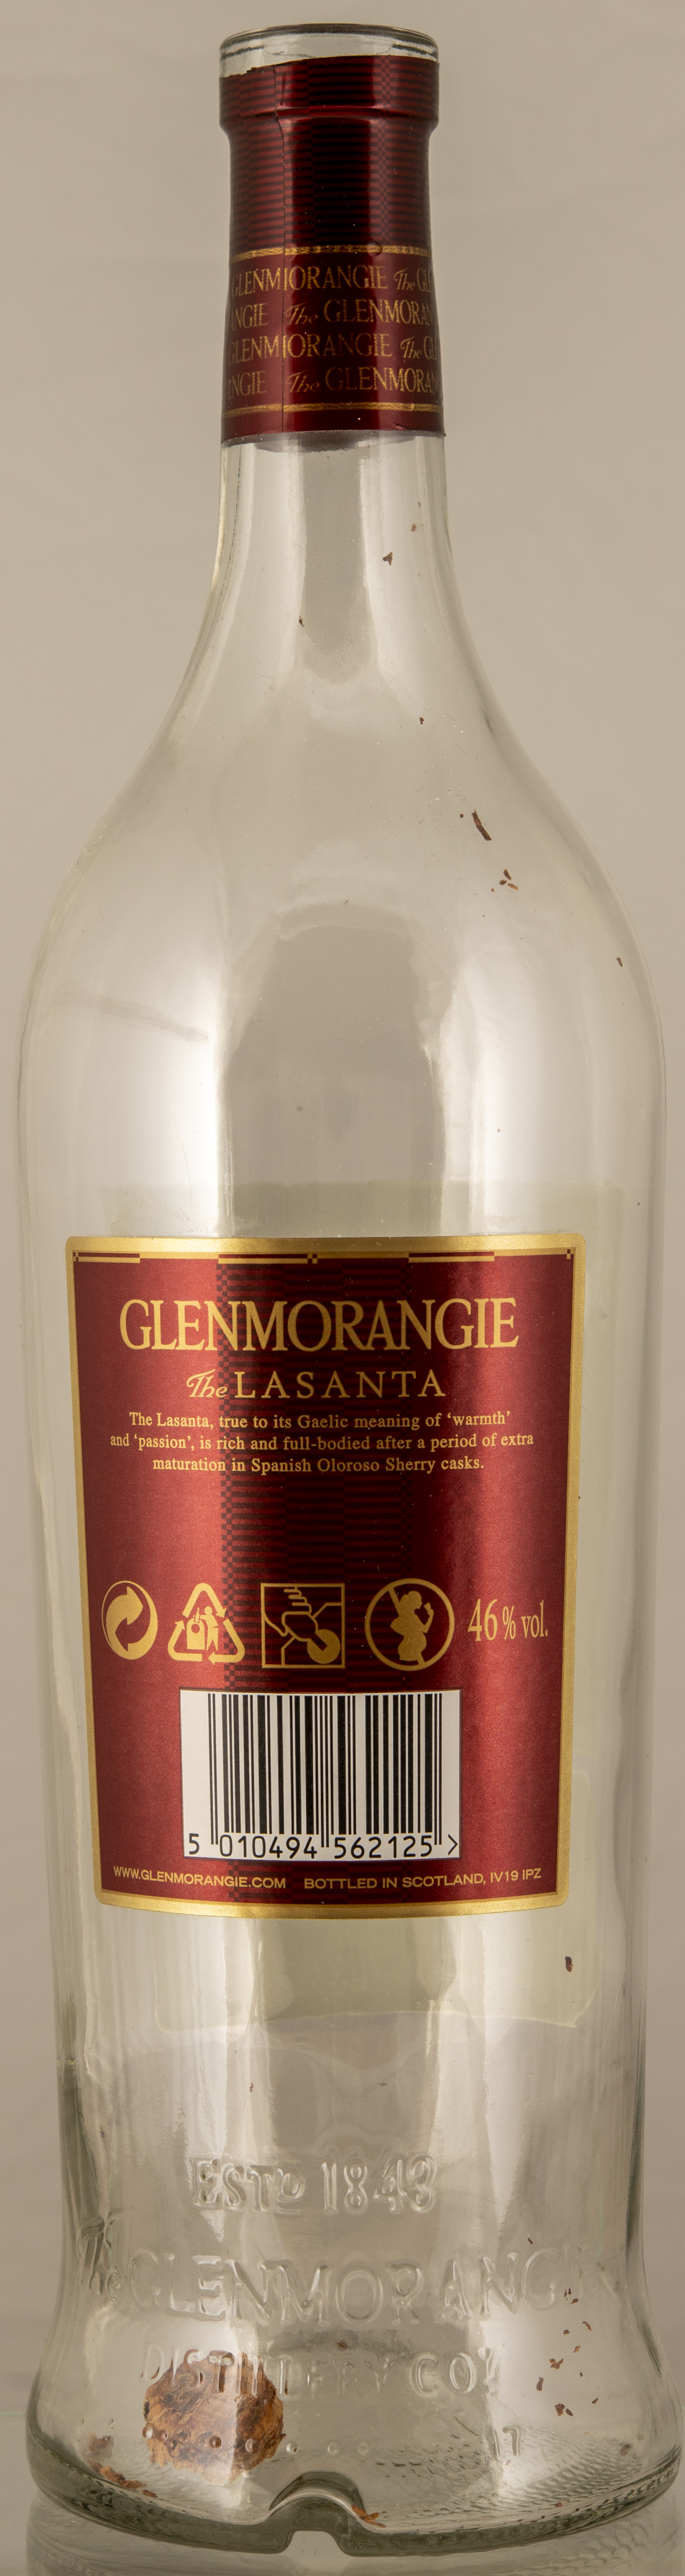 Billede: D85_8405 - Glenmorangie Lasanata - bottle back.jpg